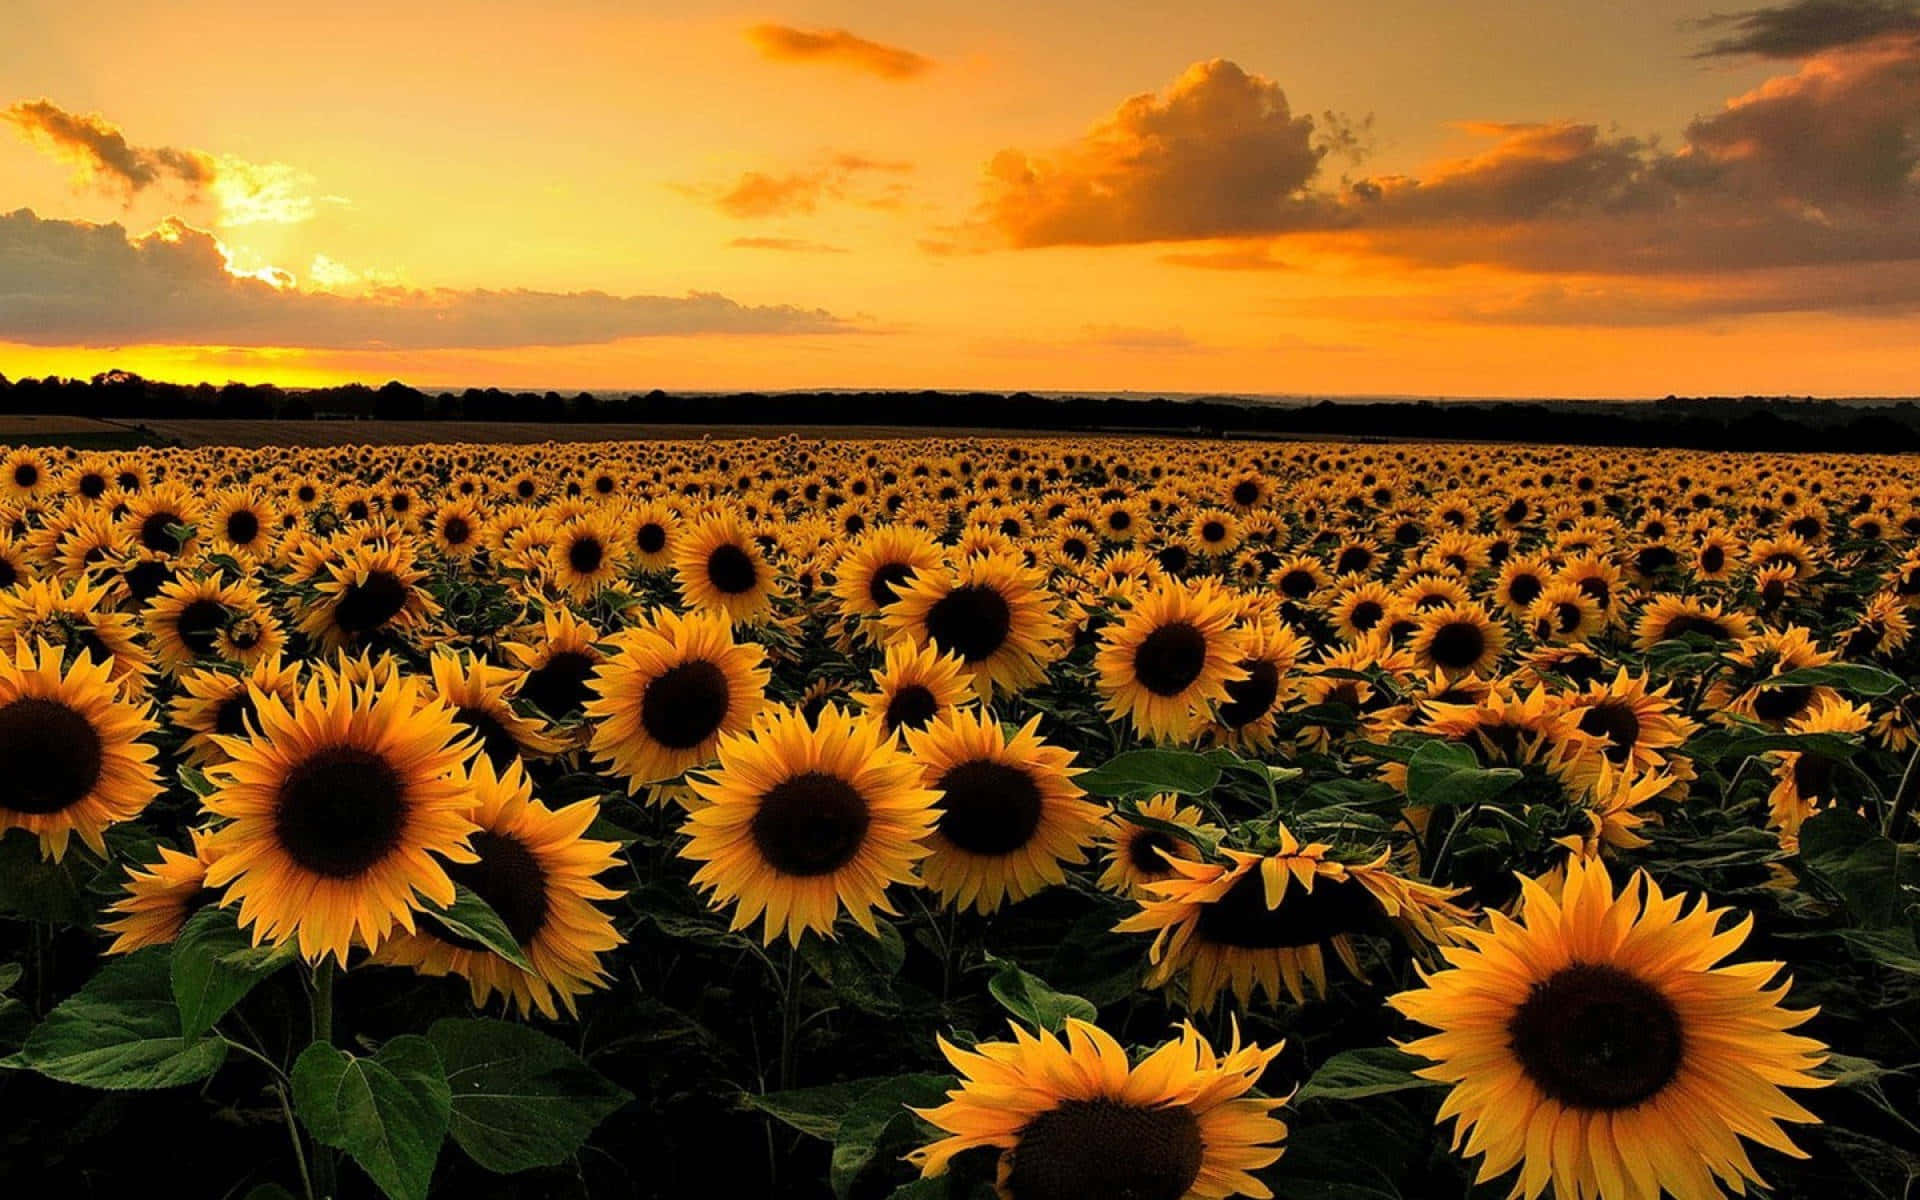 The warm summer sunshine and a beautiful sunflower create a peaceful aesthetic.